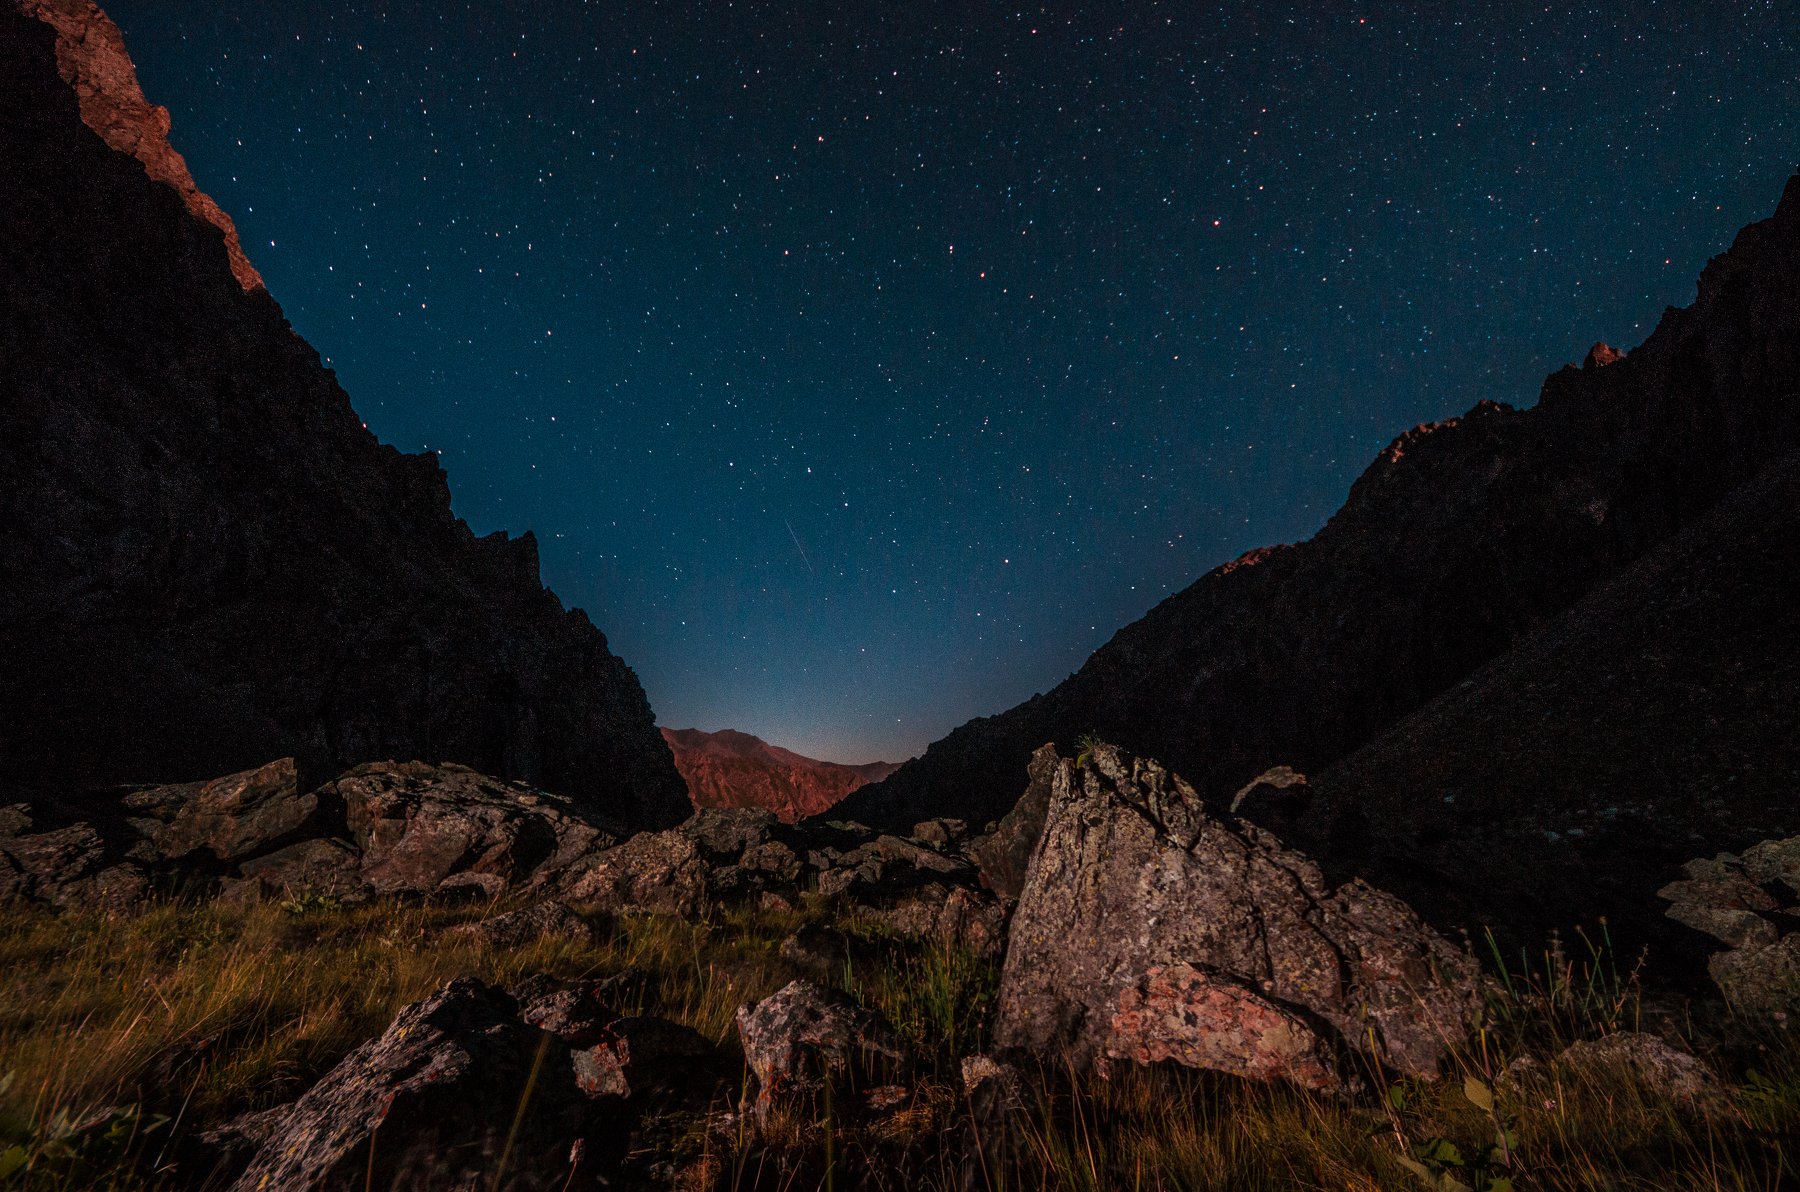 киргизский хребет, горы, камни, ночь, звёзды, тянь-шань, топ-карагай, Evgeniy Khilkevitch